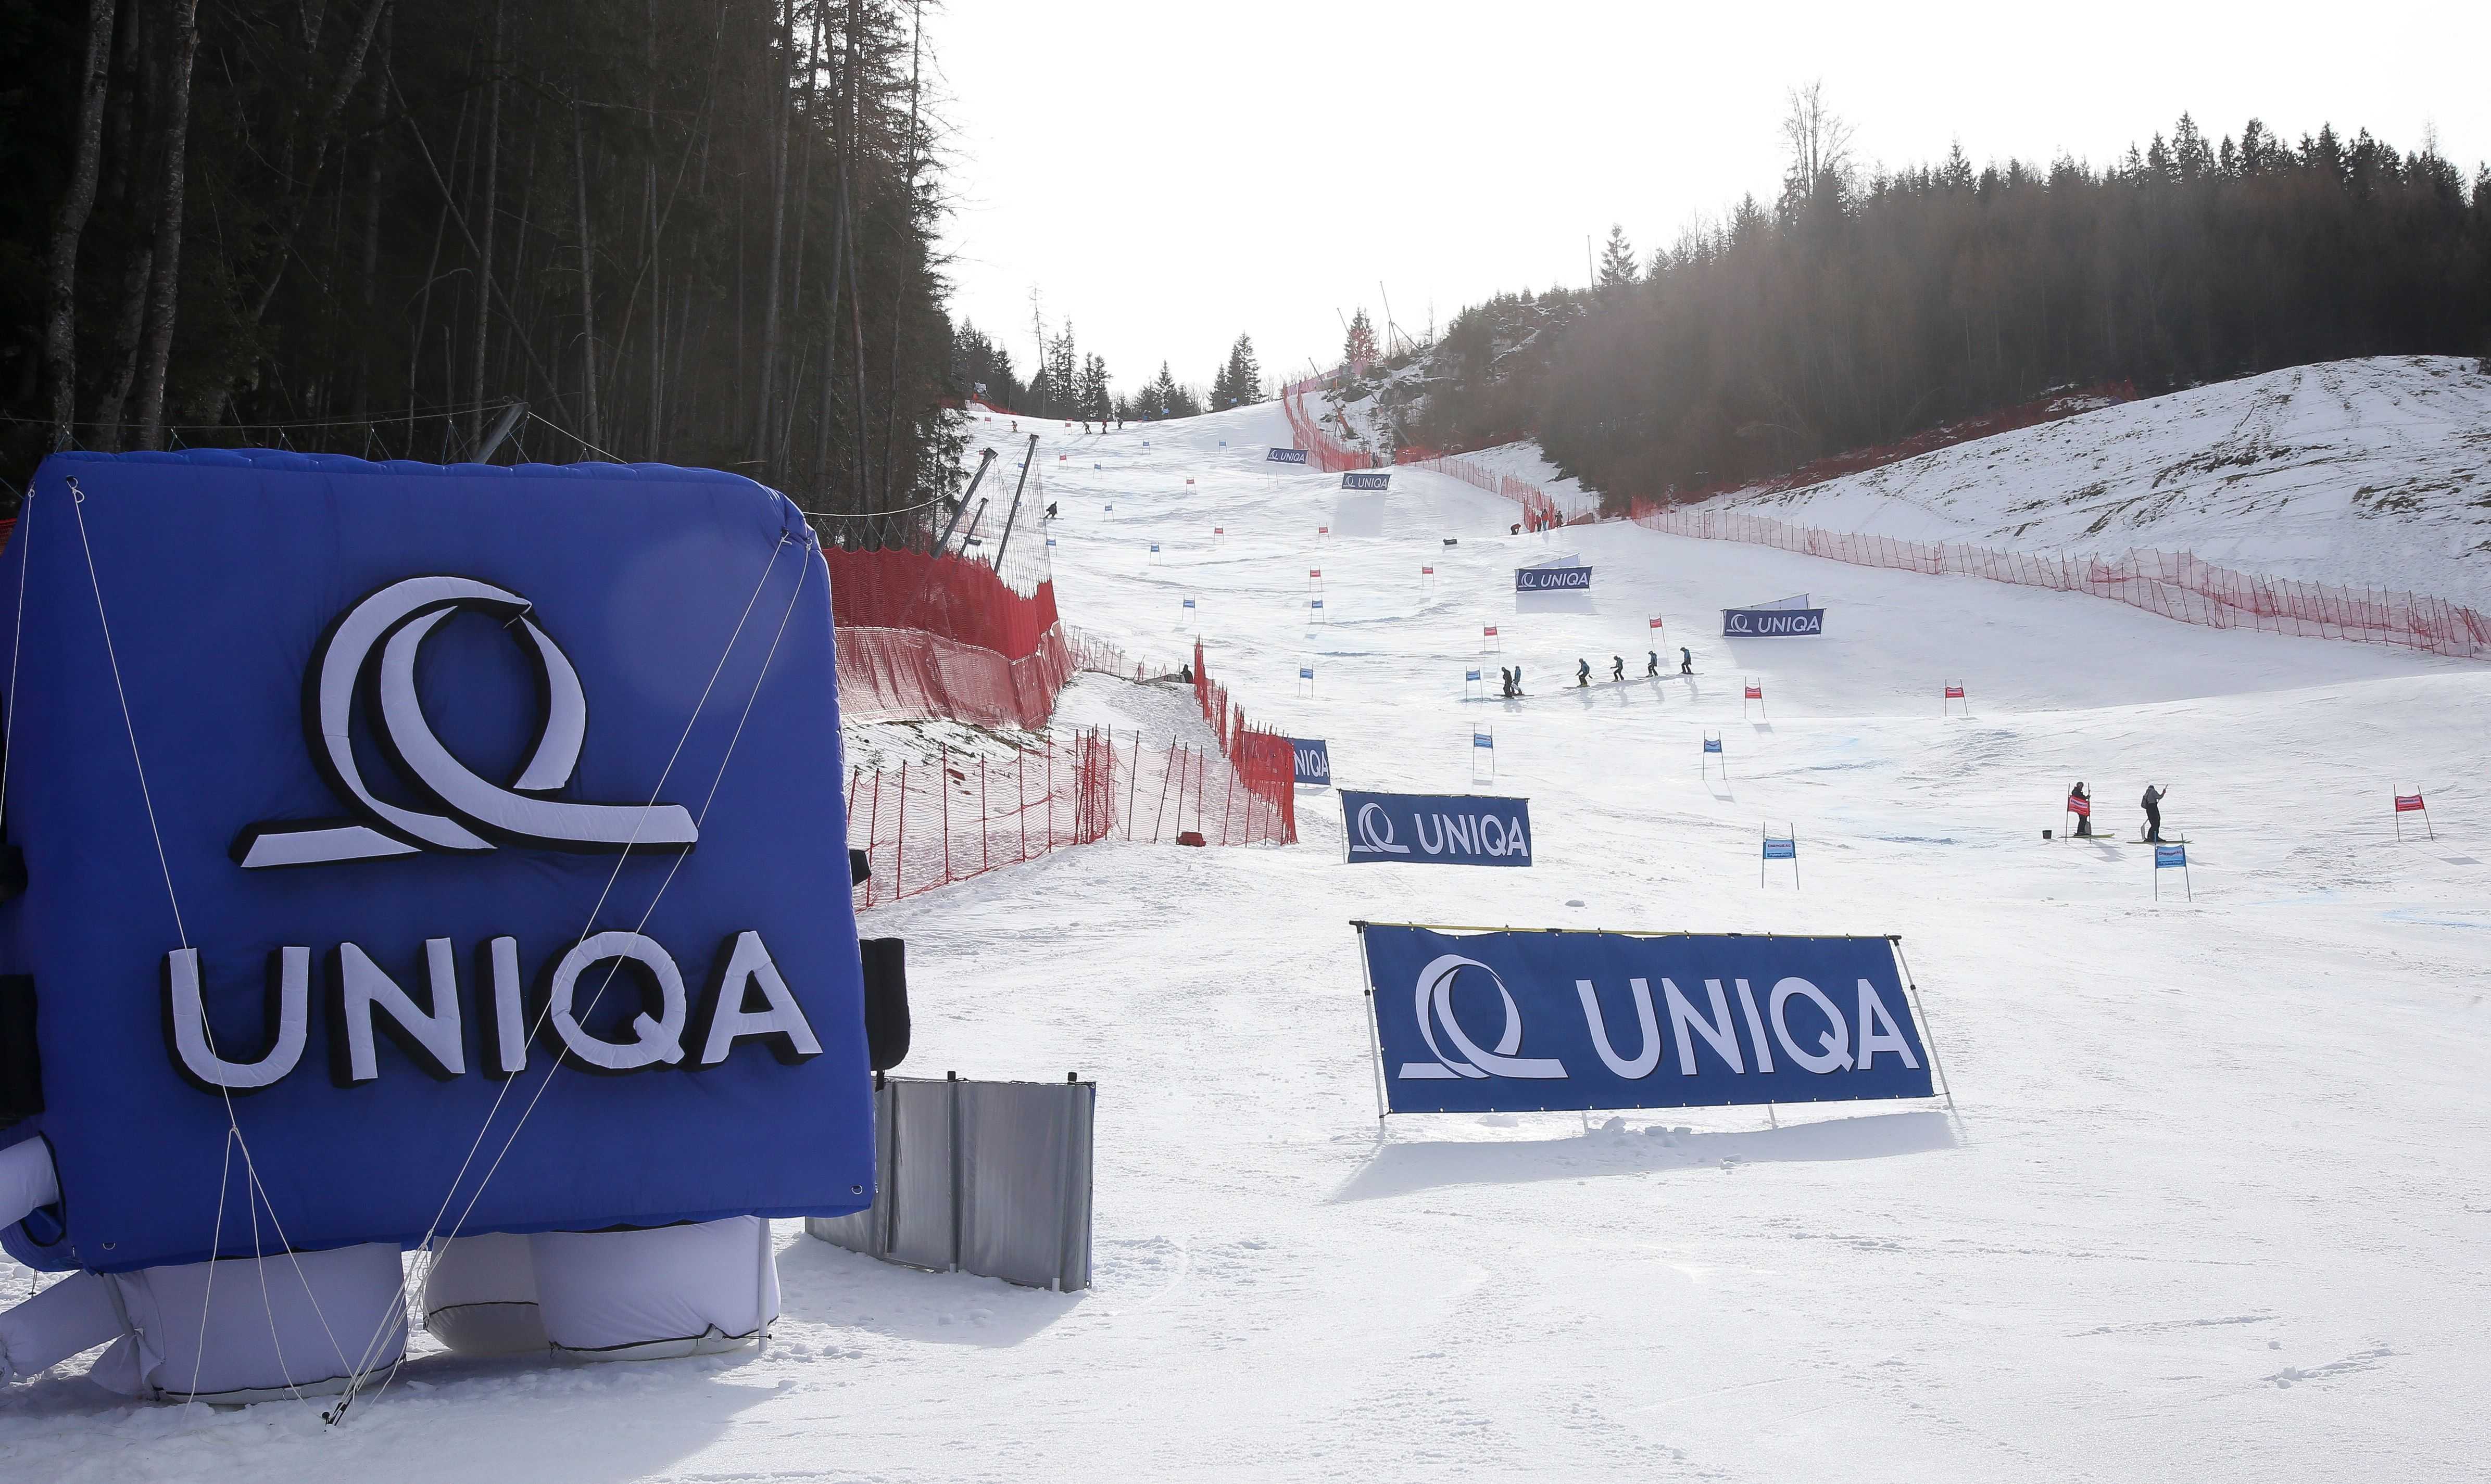 UNIQA – Digitale Aktivierung des Ski-Sponsorings